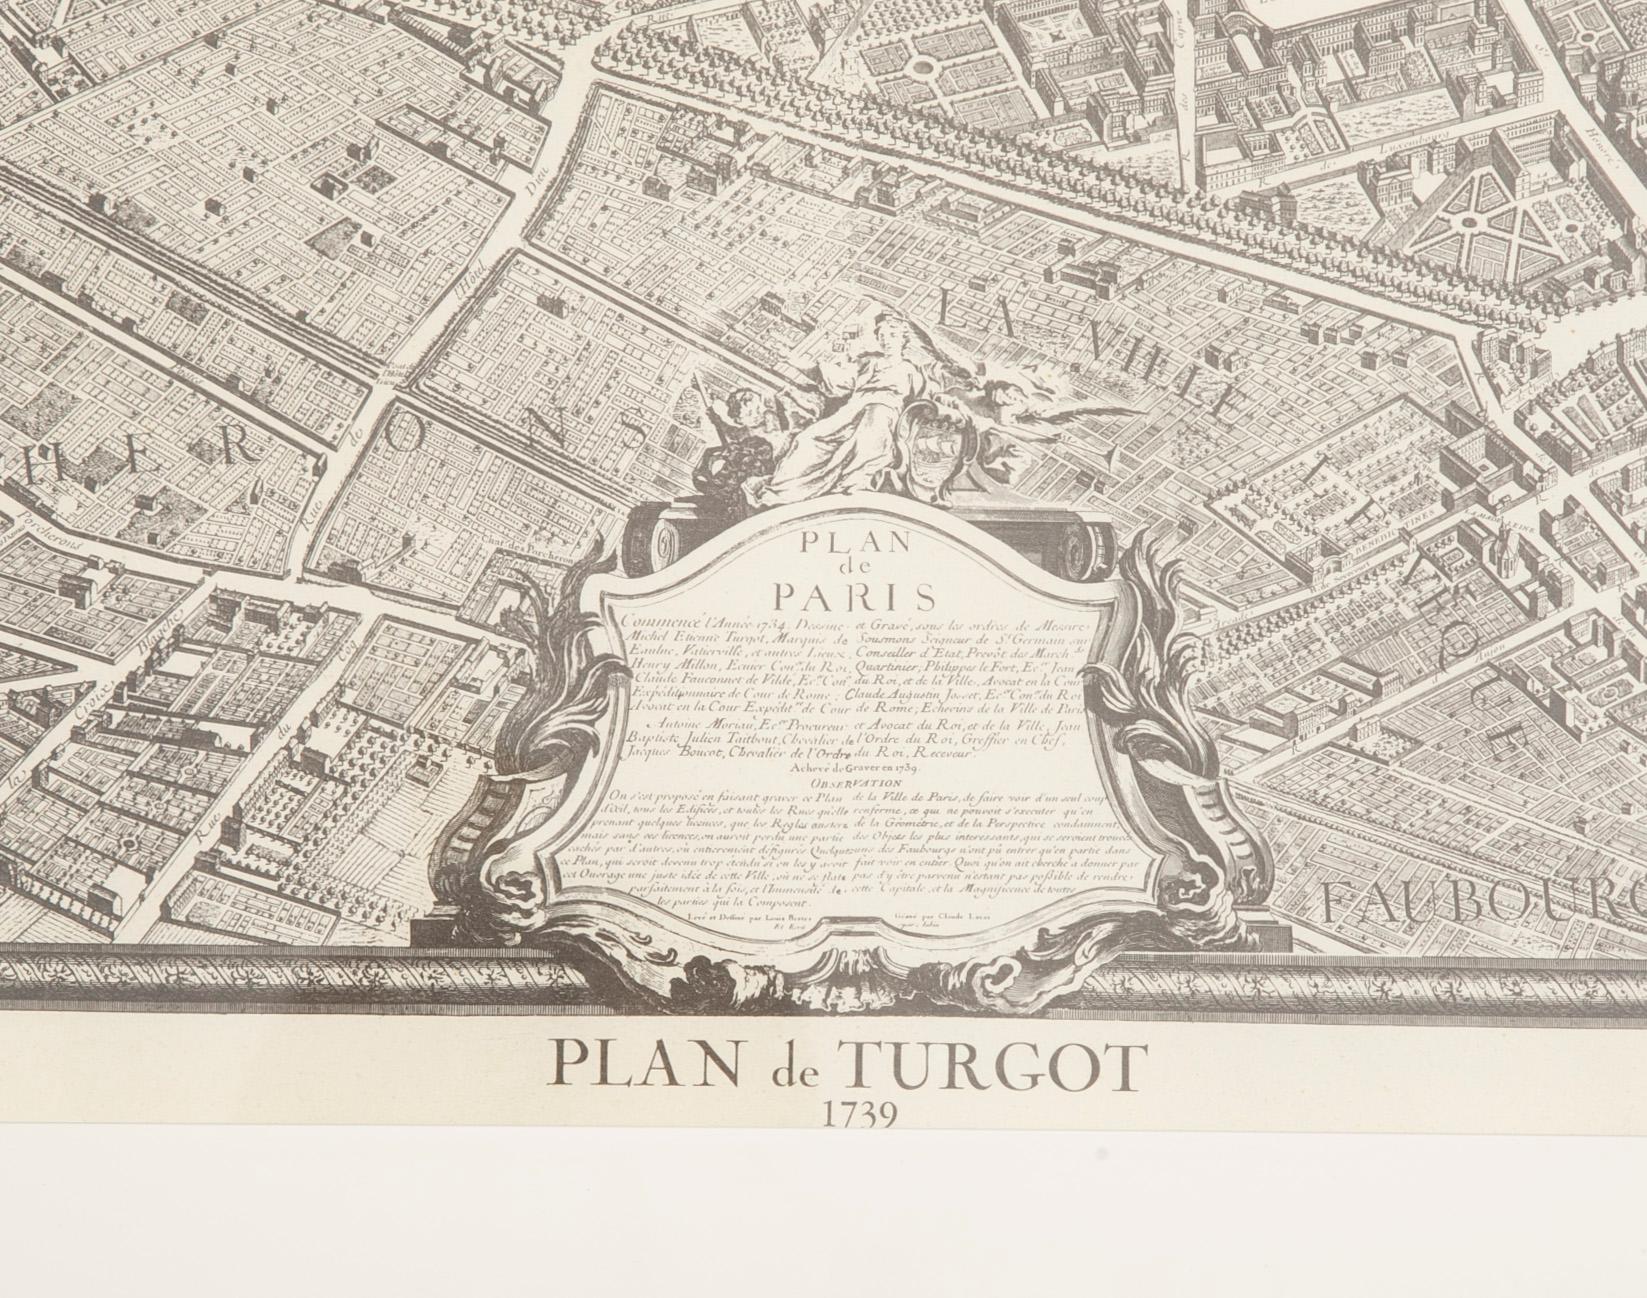 Paper Vintage Map of Paris after the Original Turgot Plan of 1739